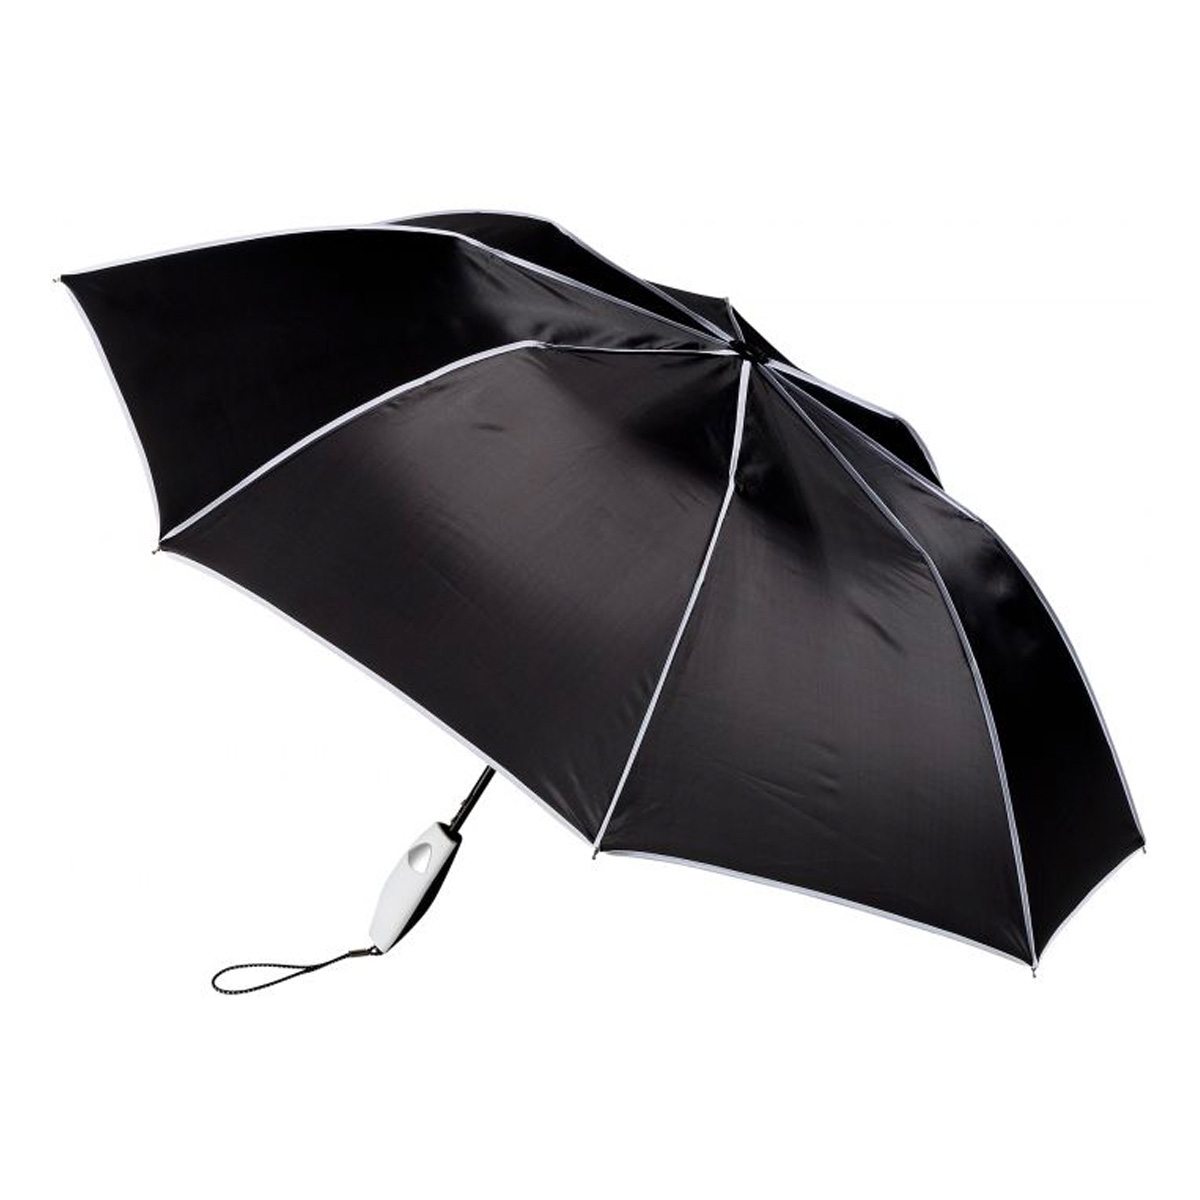 Falconetti Paraplu Opvouwbaar Automaat online kopen? Falconetti Paraplu